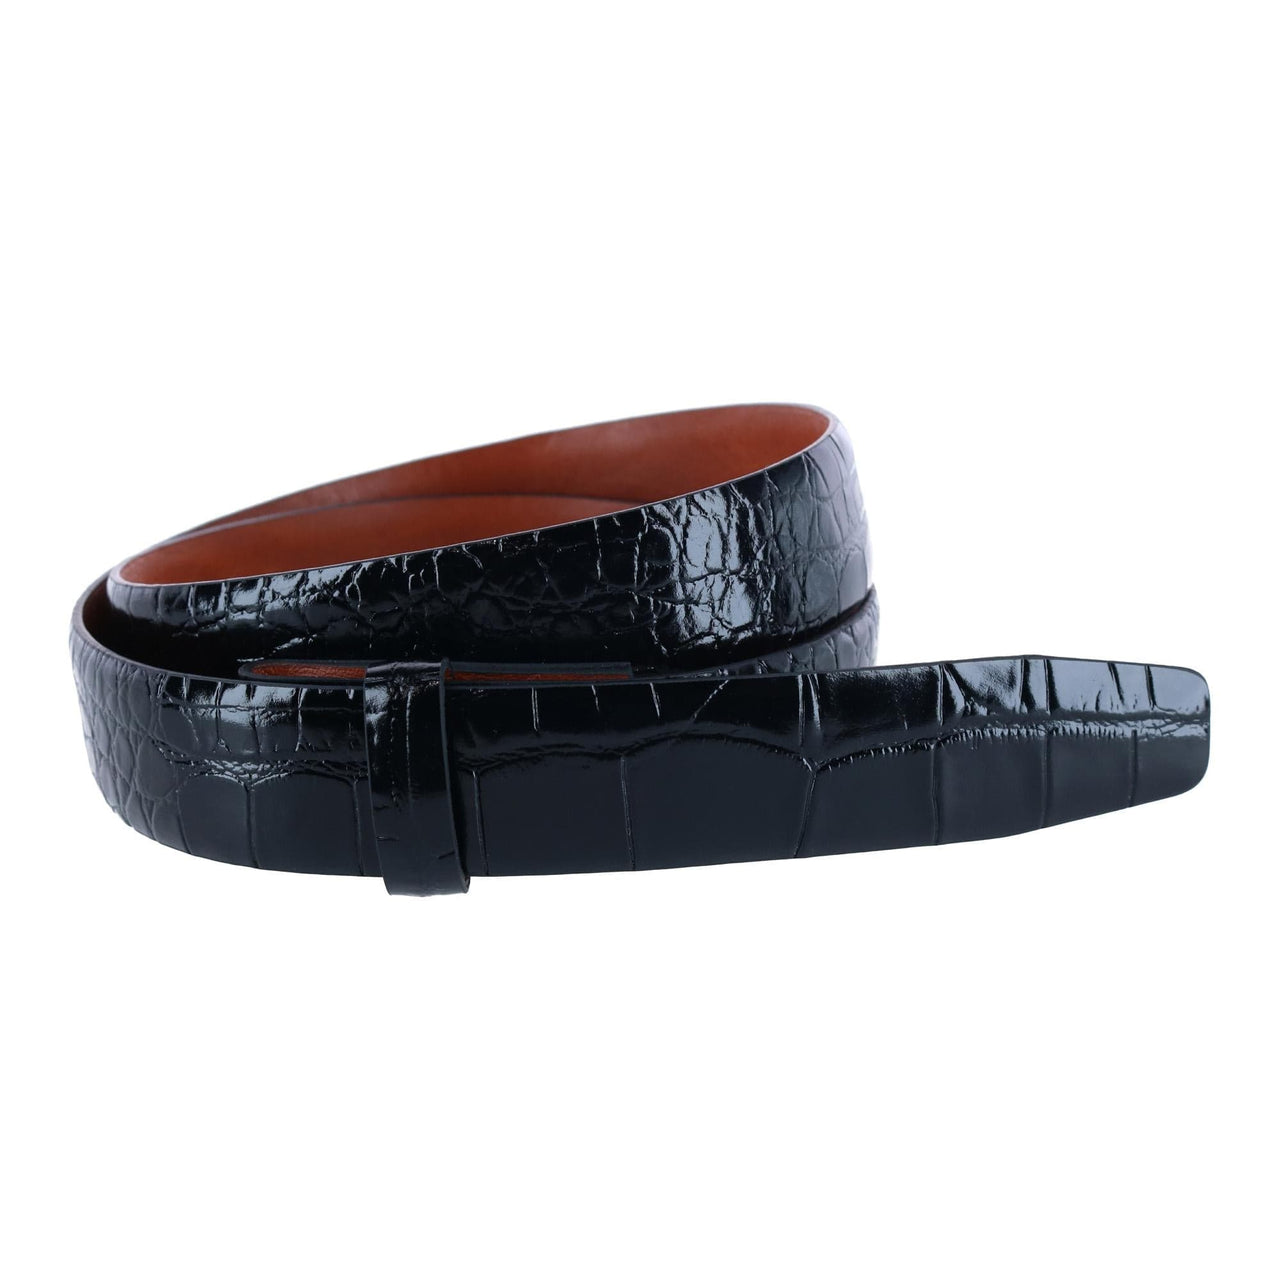 Cortina Leather 25mm Compression Belt Strap by Trafalgar Men's Accessories